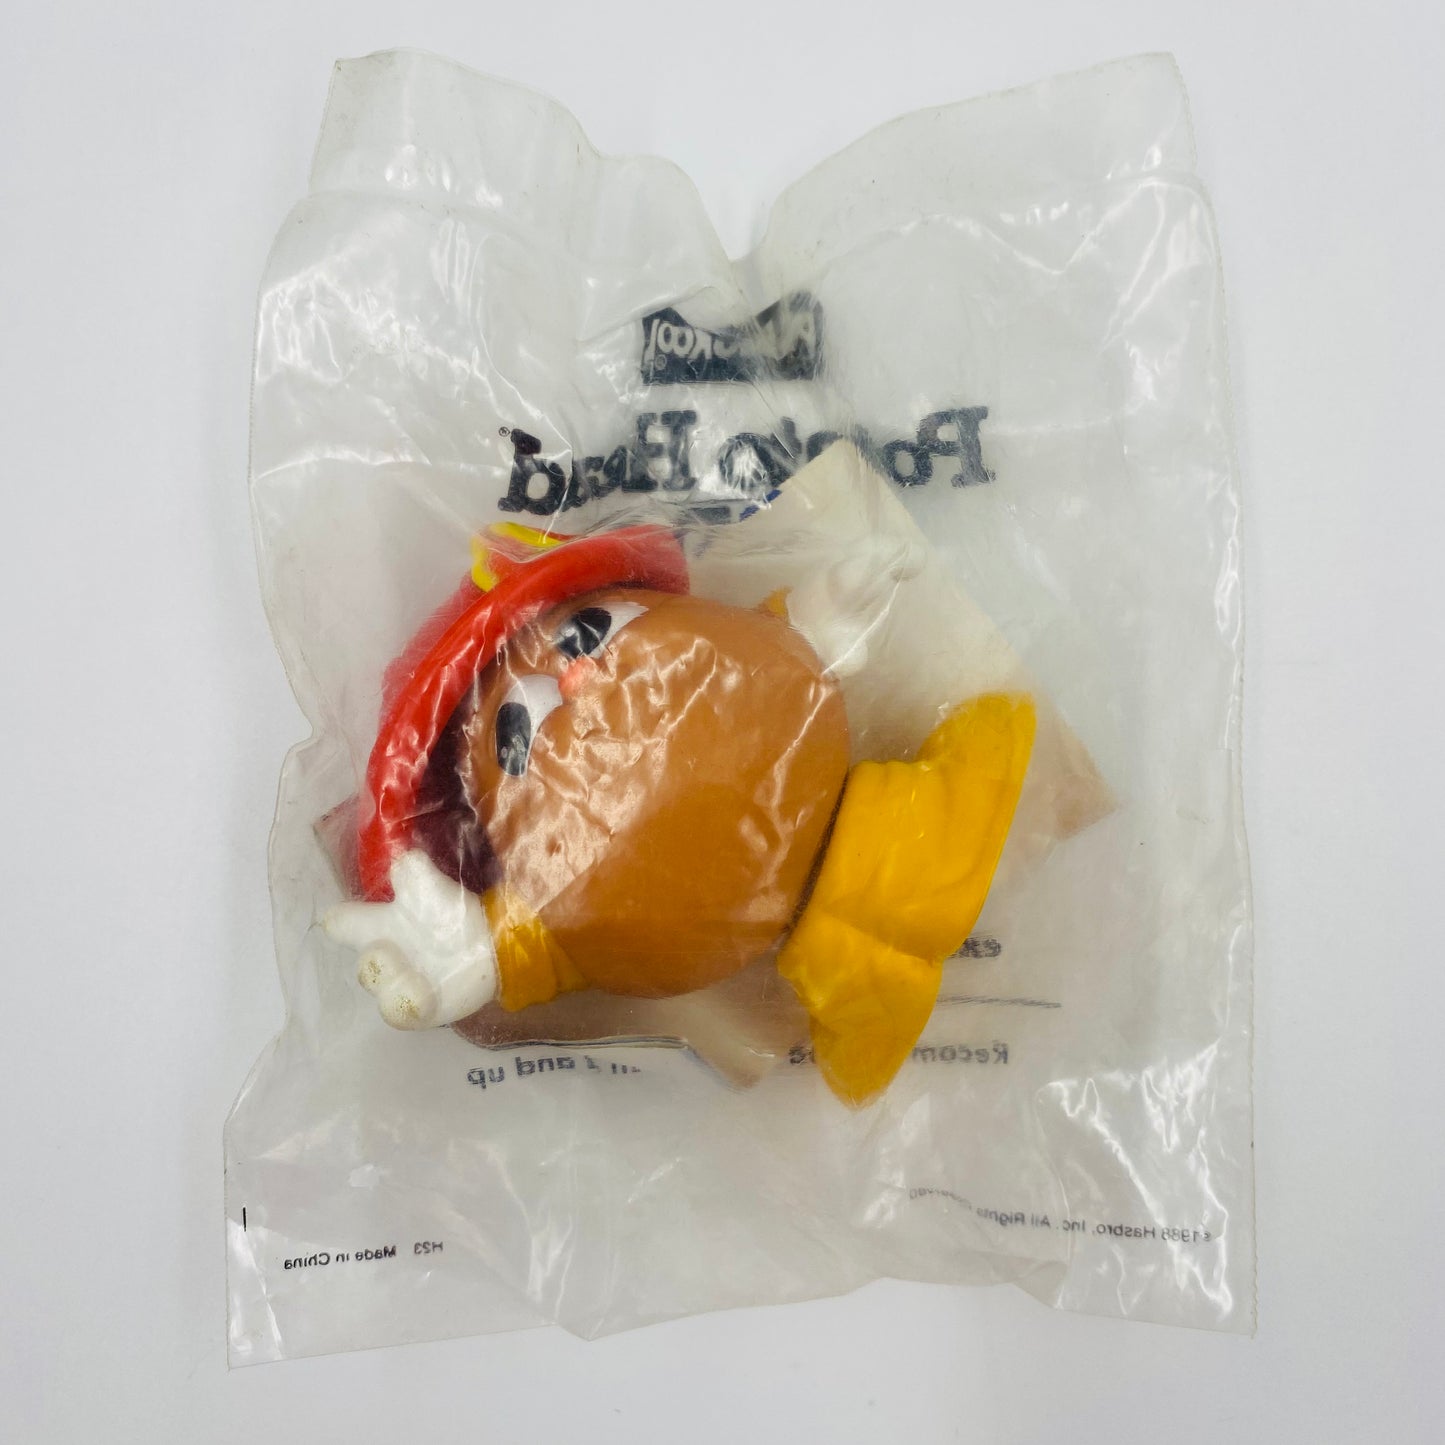 Playskool Potato Head Kids Fireman Sparky Wendy's Kids' Meal toy (1988) bagged